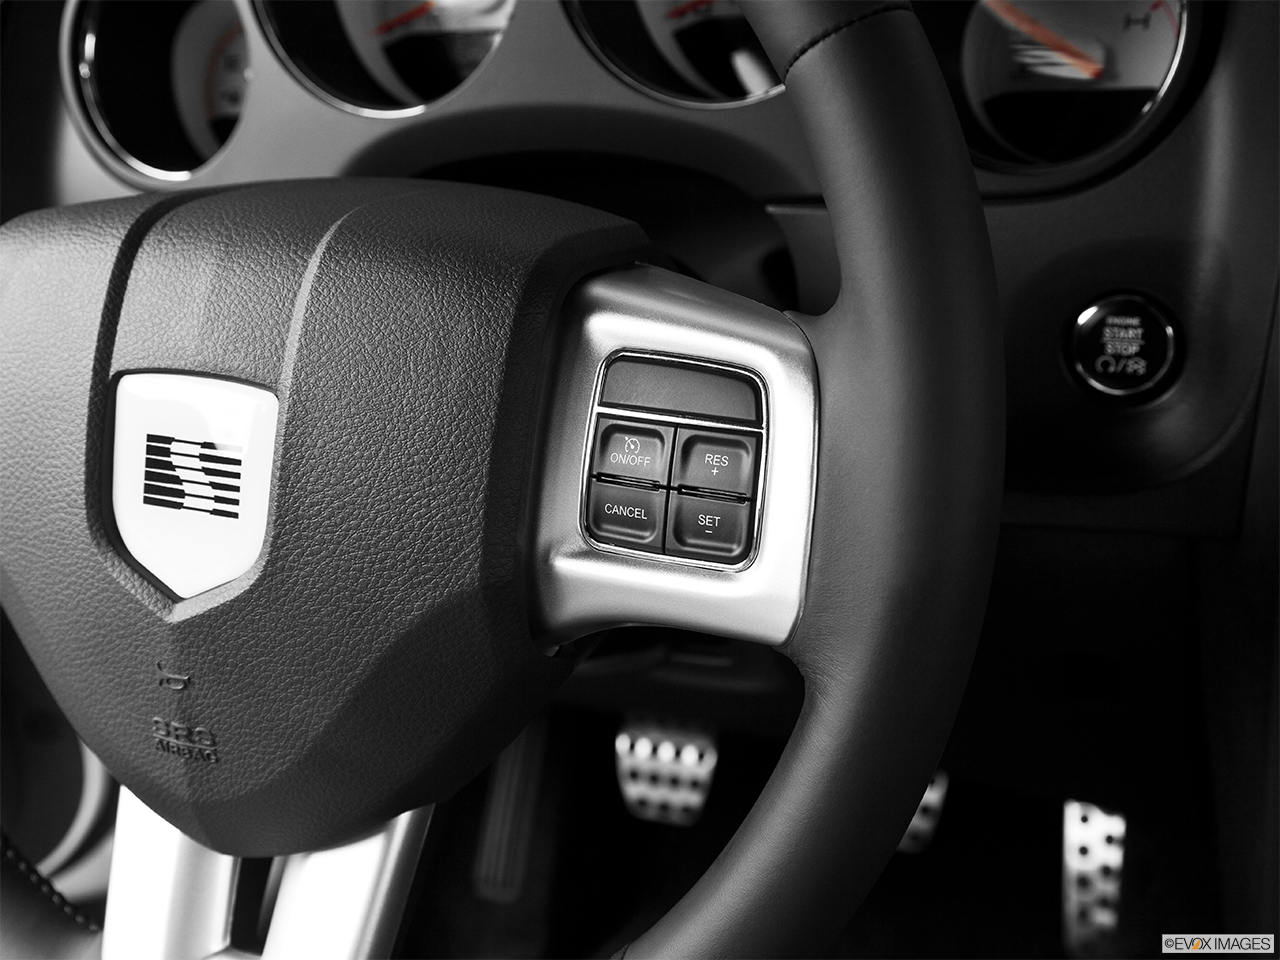 2014 Saleen 570 Challenger Label 570 Black Label Steering Wheel Controls (Right Side) 